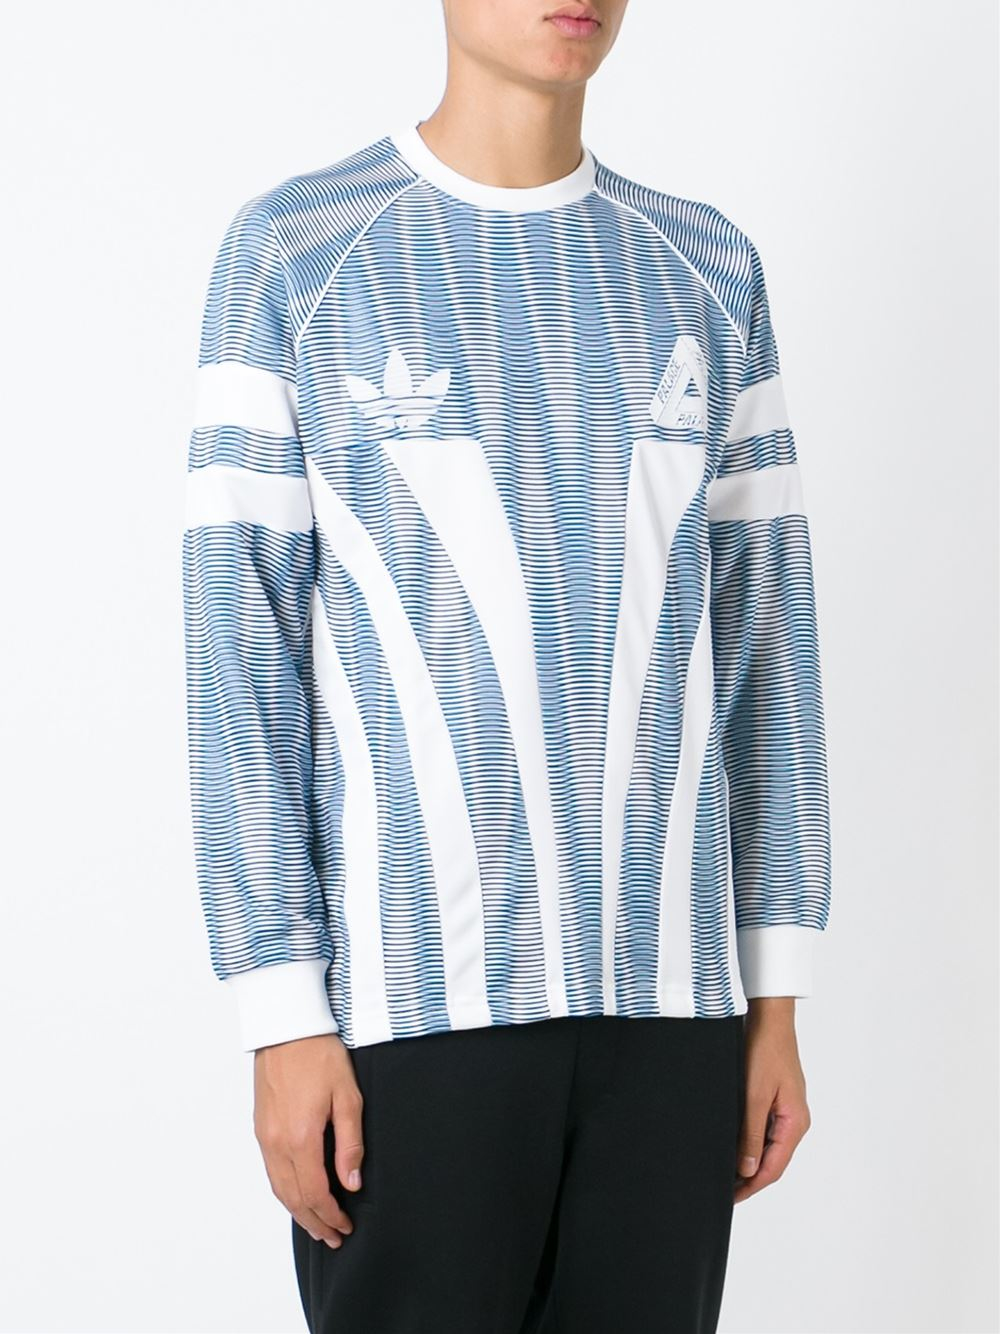 adidas Originals ' X Palace' Sweatshirt in White (Blue) for Men - Lyst